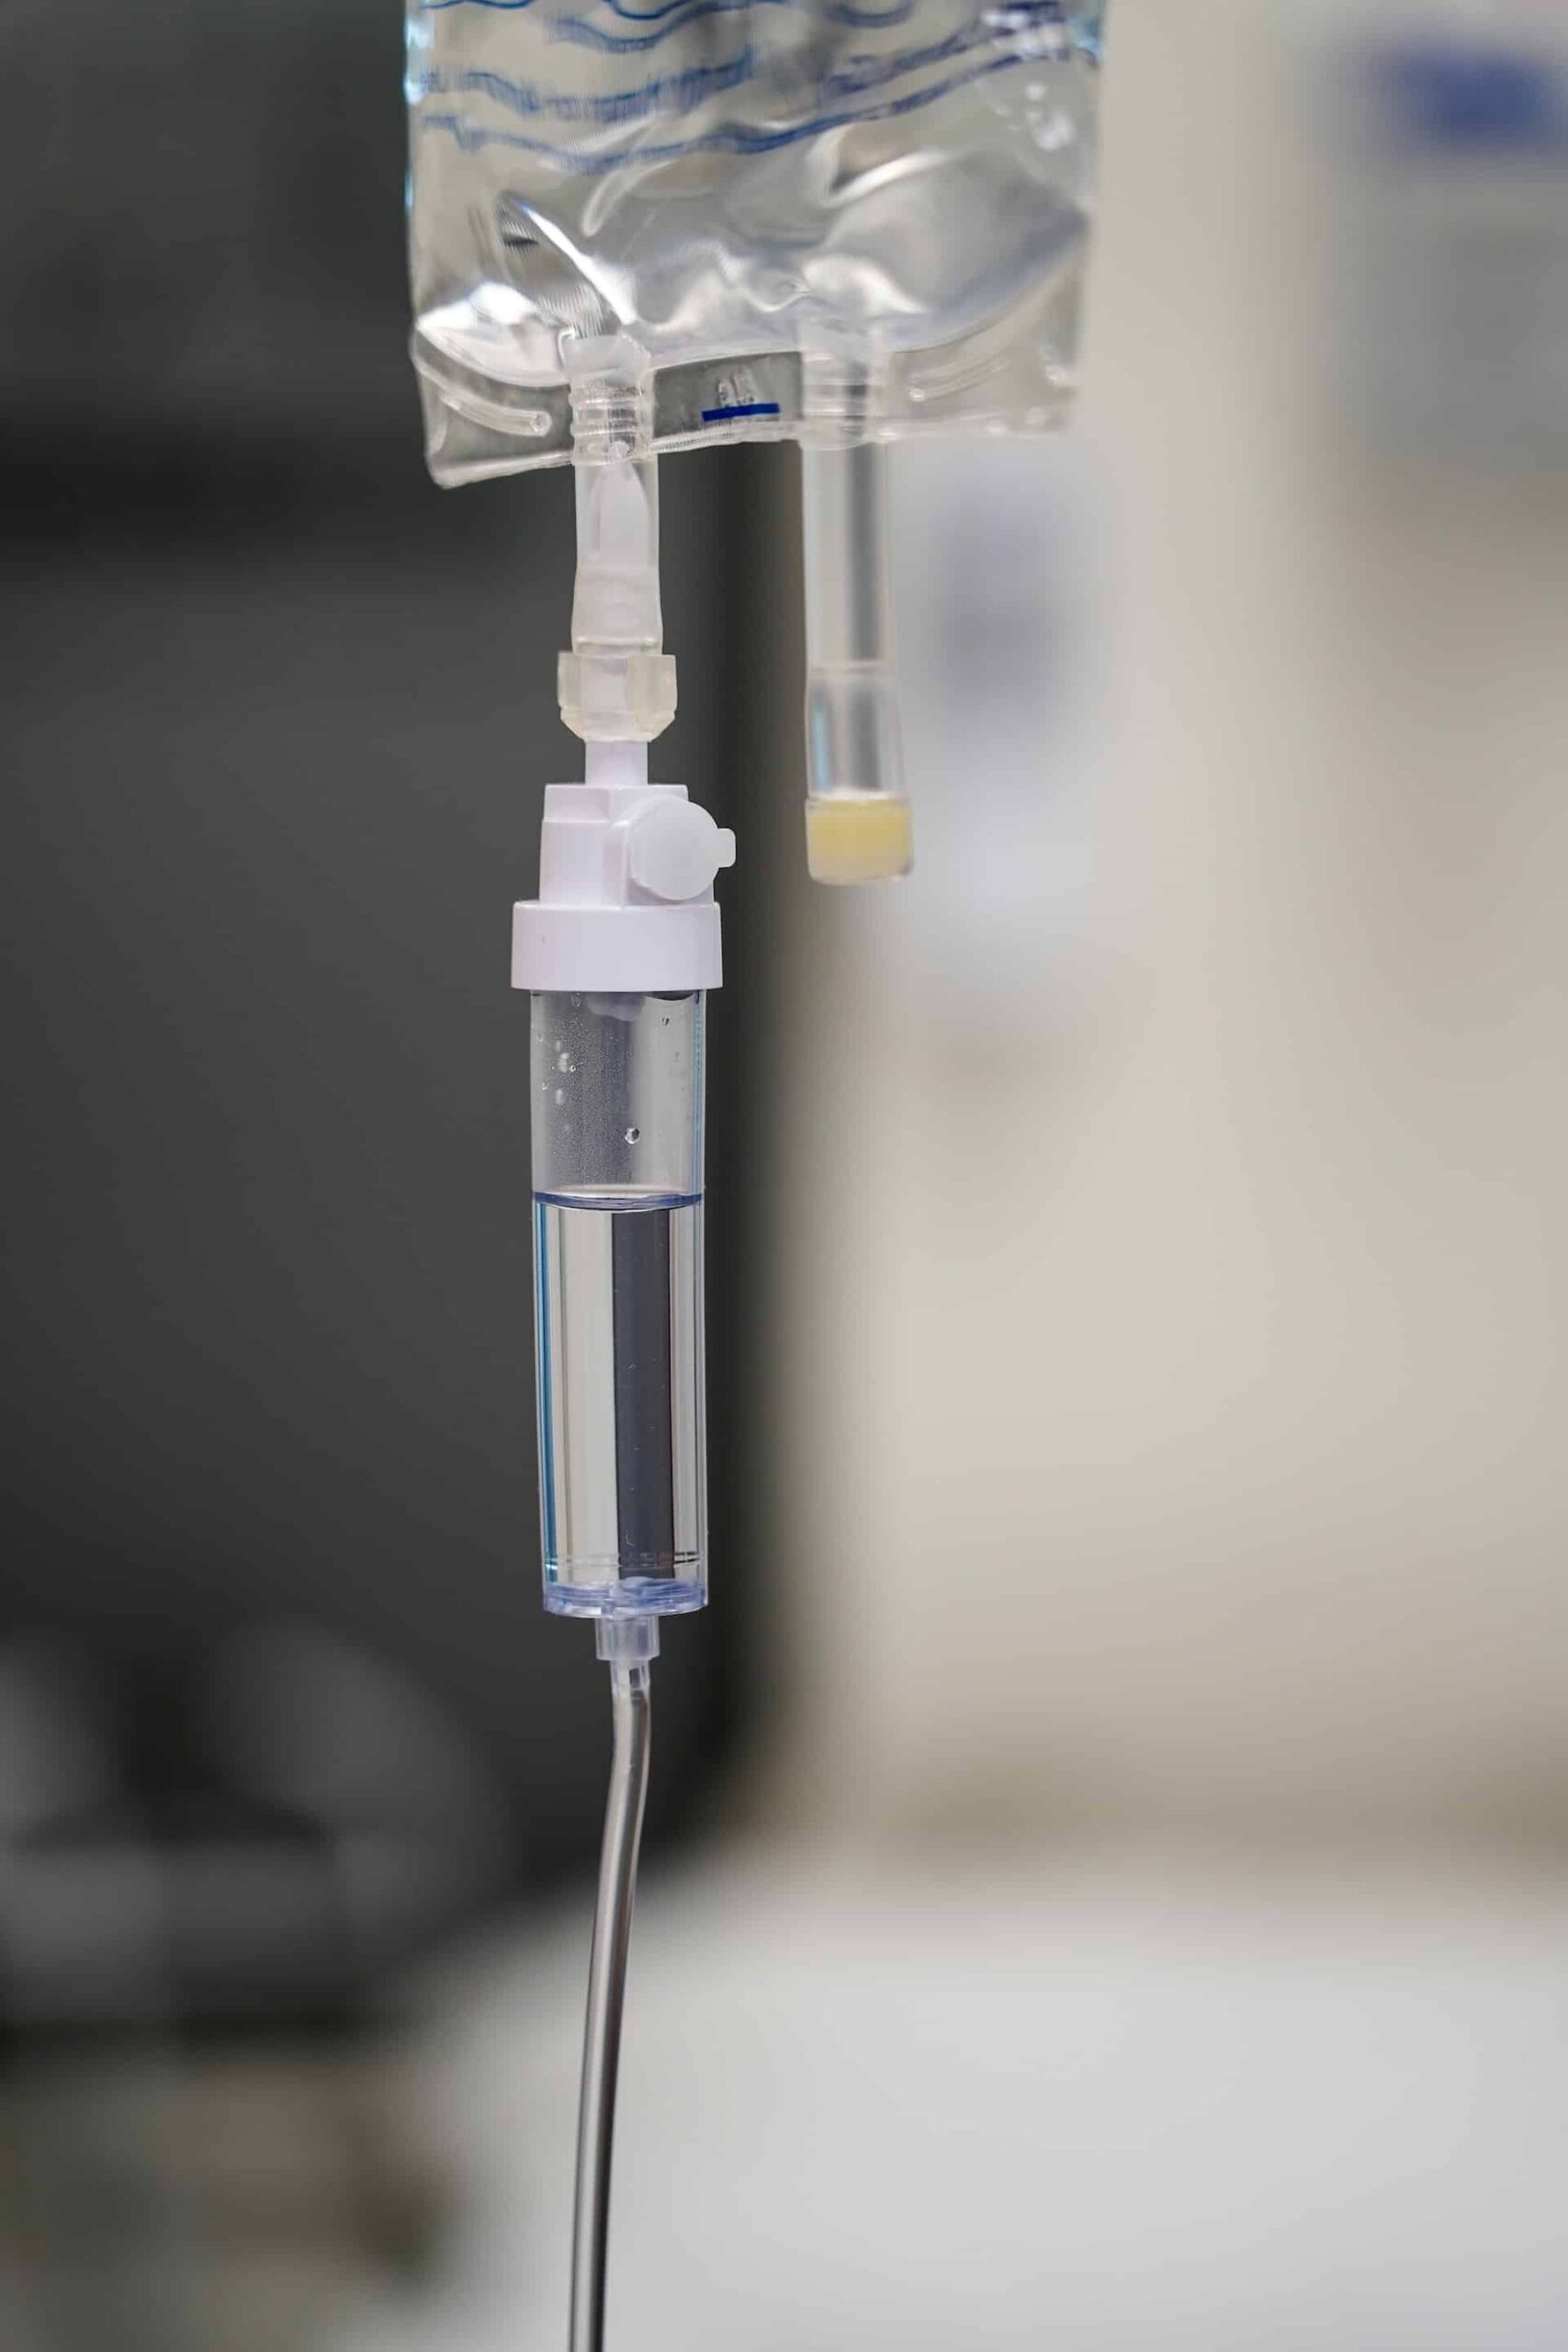 IV treatment tube